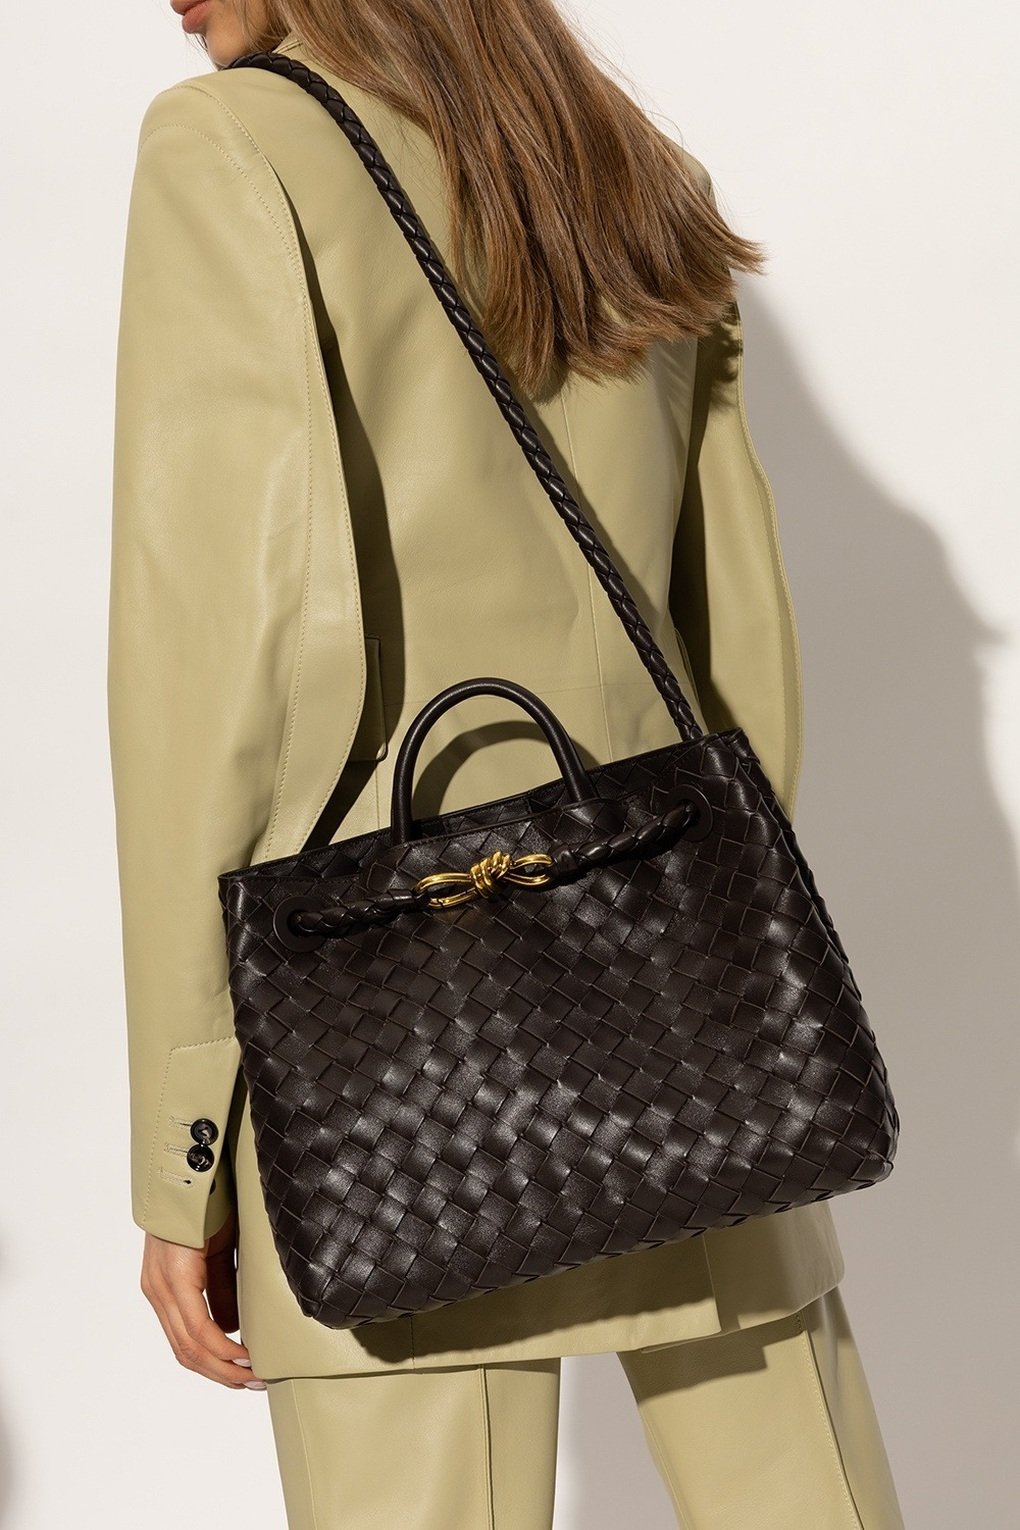 Luxurious handbag models for office ladies